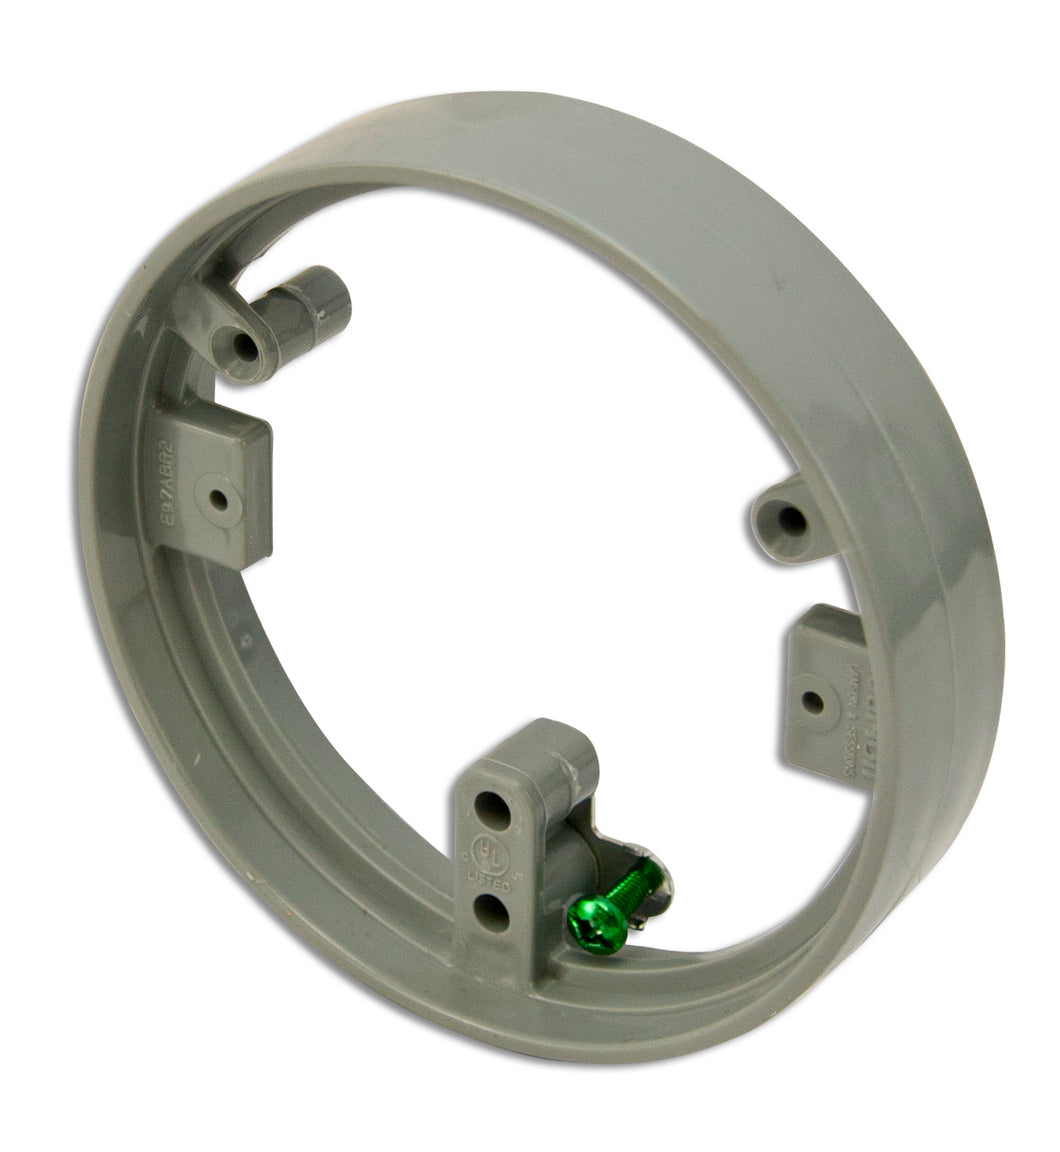 Carlon E97ABR2 Floor Box Cover Adapter Ring, Diameter: 5